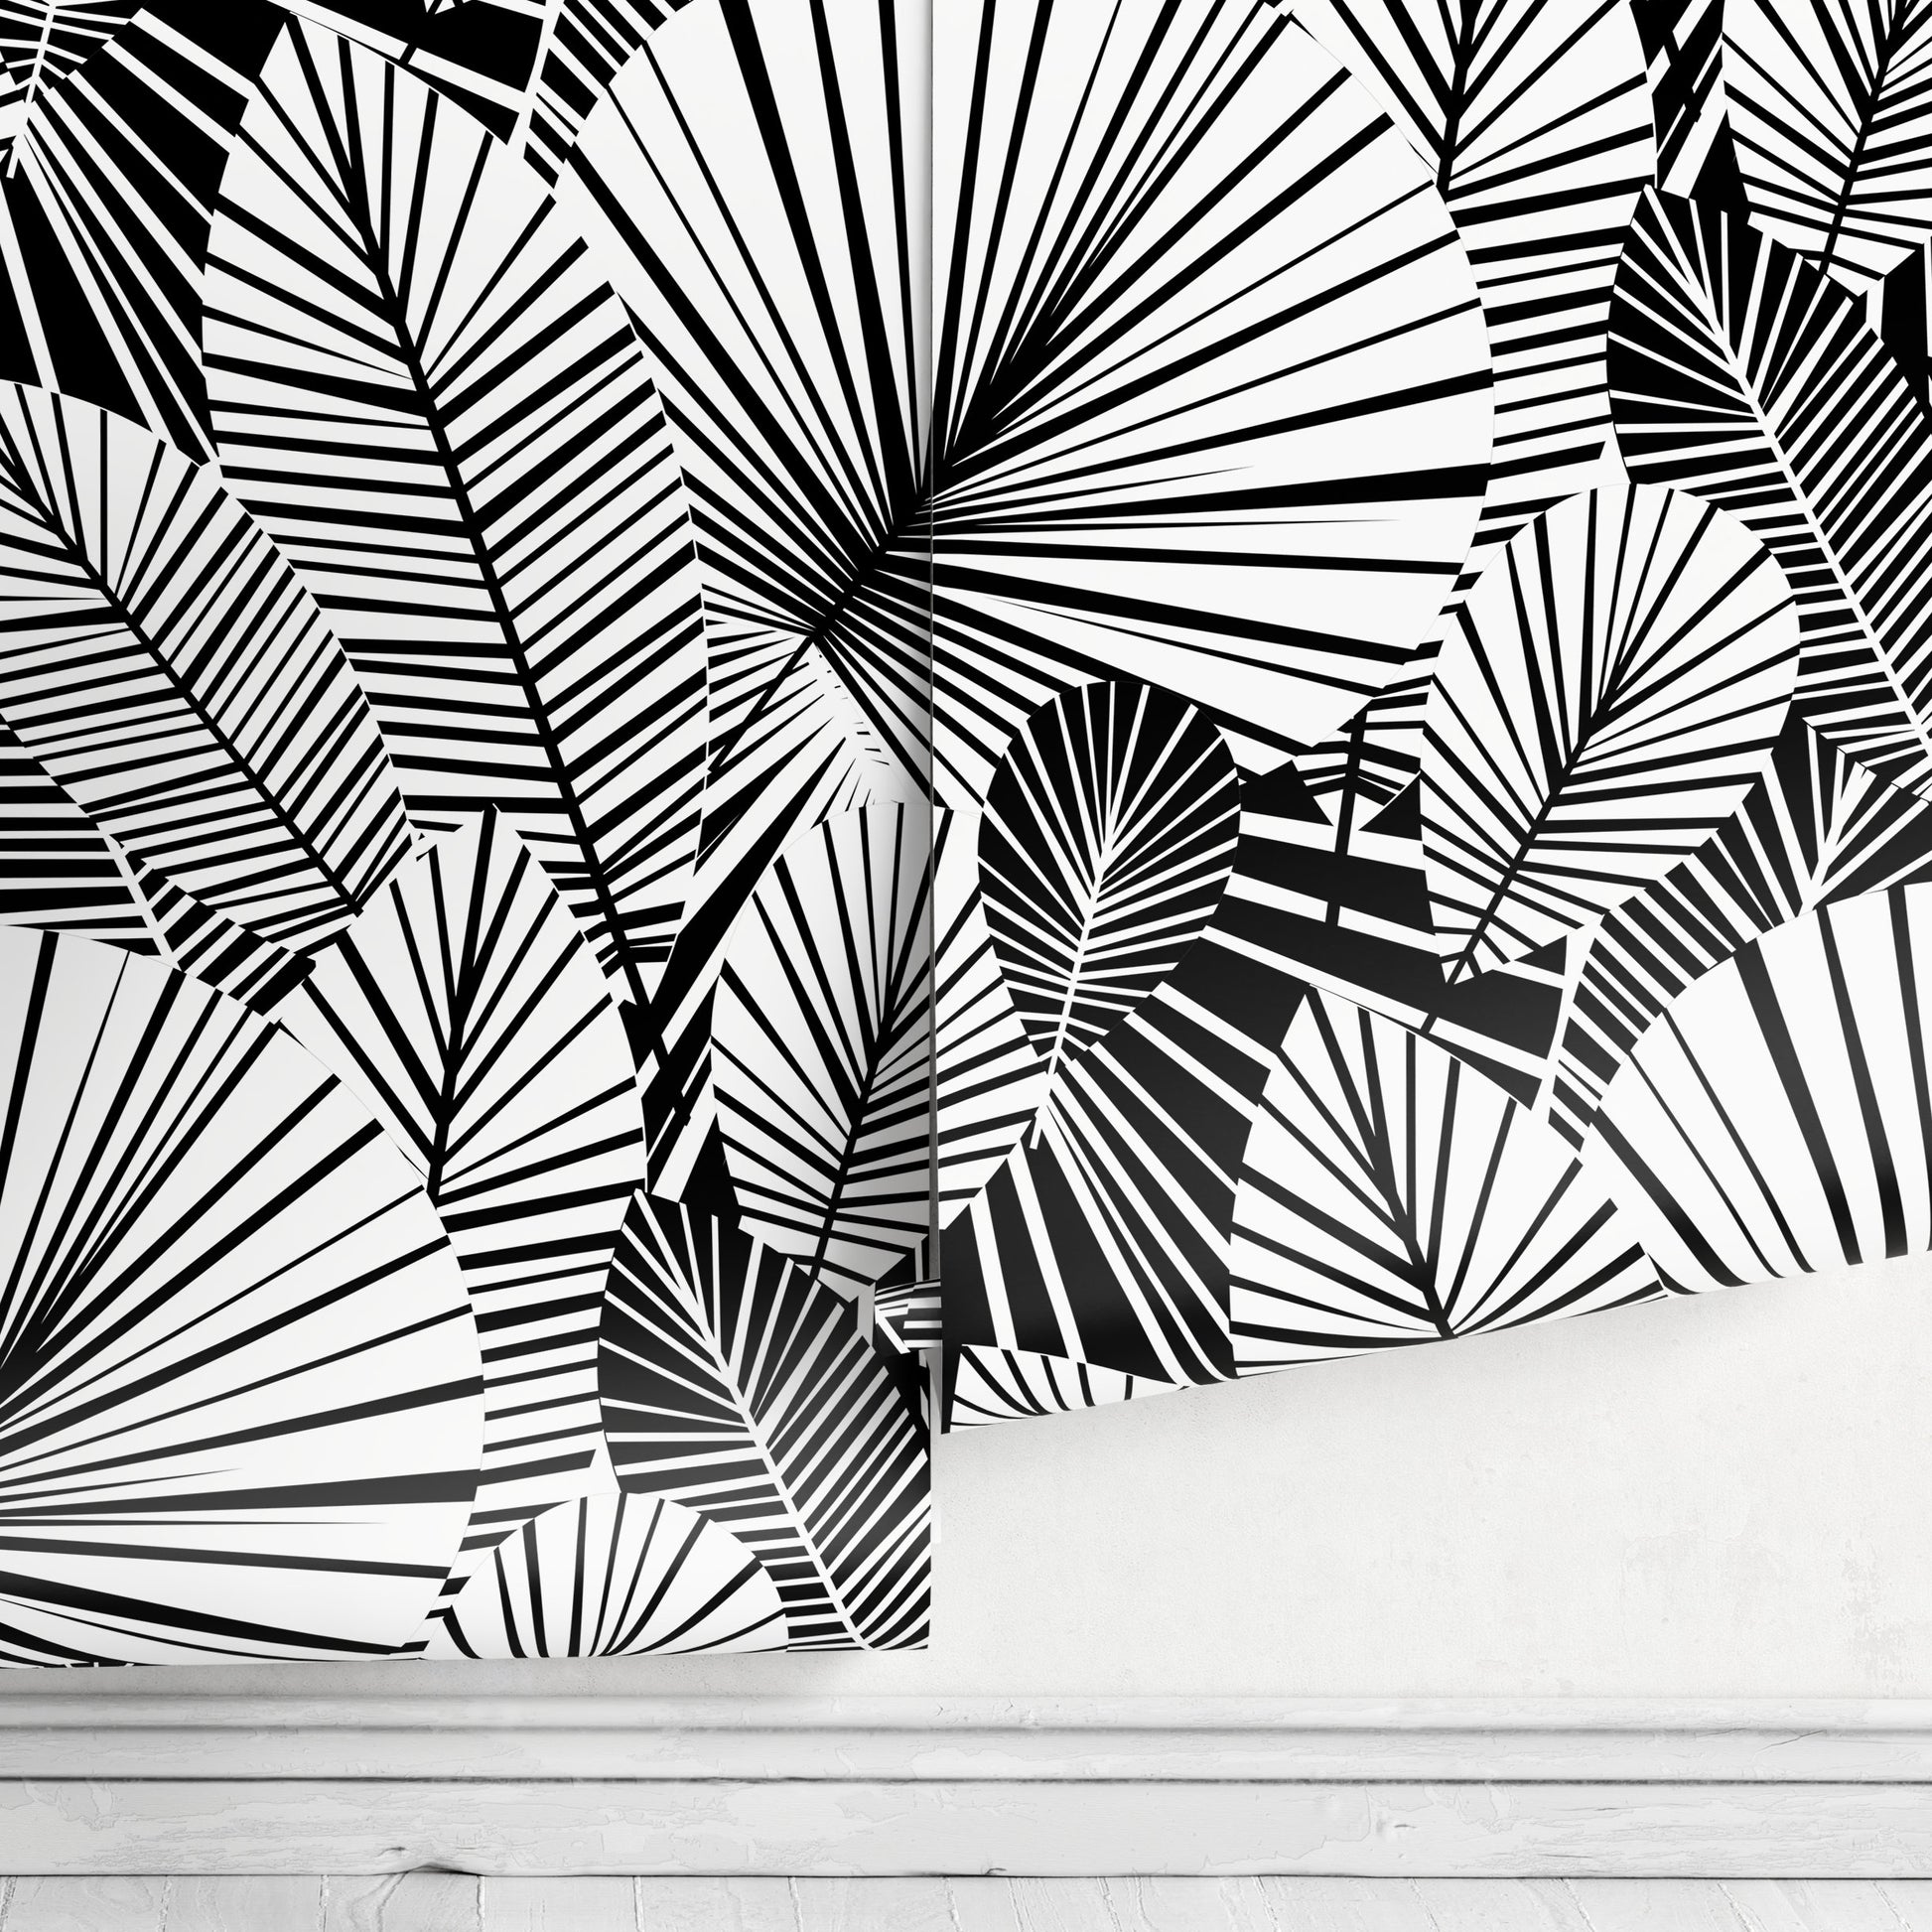 Wallpaper Peel and Stick Wallpaper Removable Wallpaper Home Decor Wall Decor Room Decor / Black and White Modern Leaves Wallpaper - B324